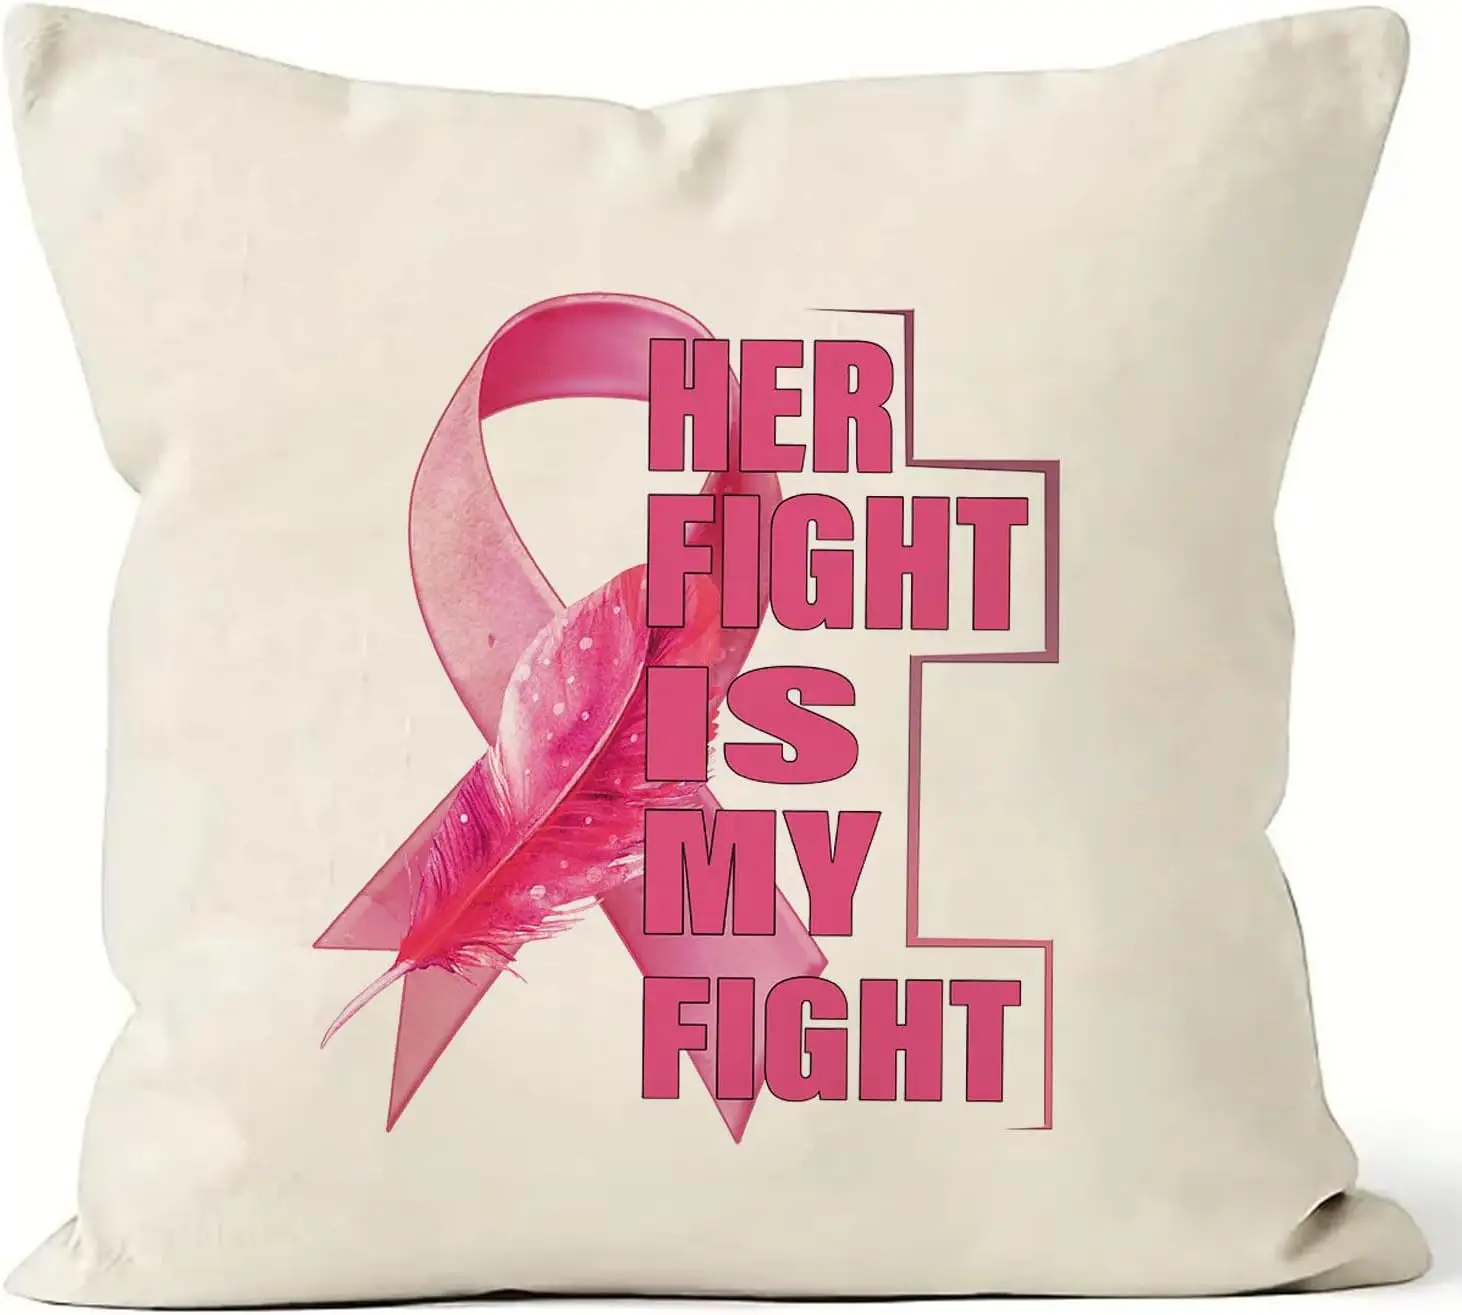 Breast Cancer Awareness Iron On Transfer Patches Pink Ribbon Iron On Transfer DTF Applique Transferências de Calor Patches de roupas DI